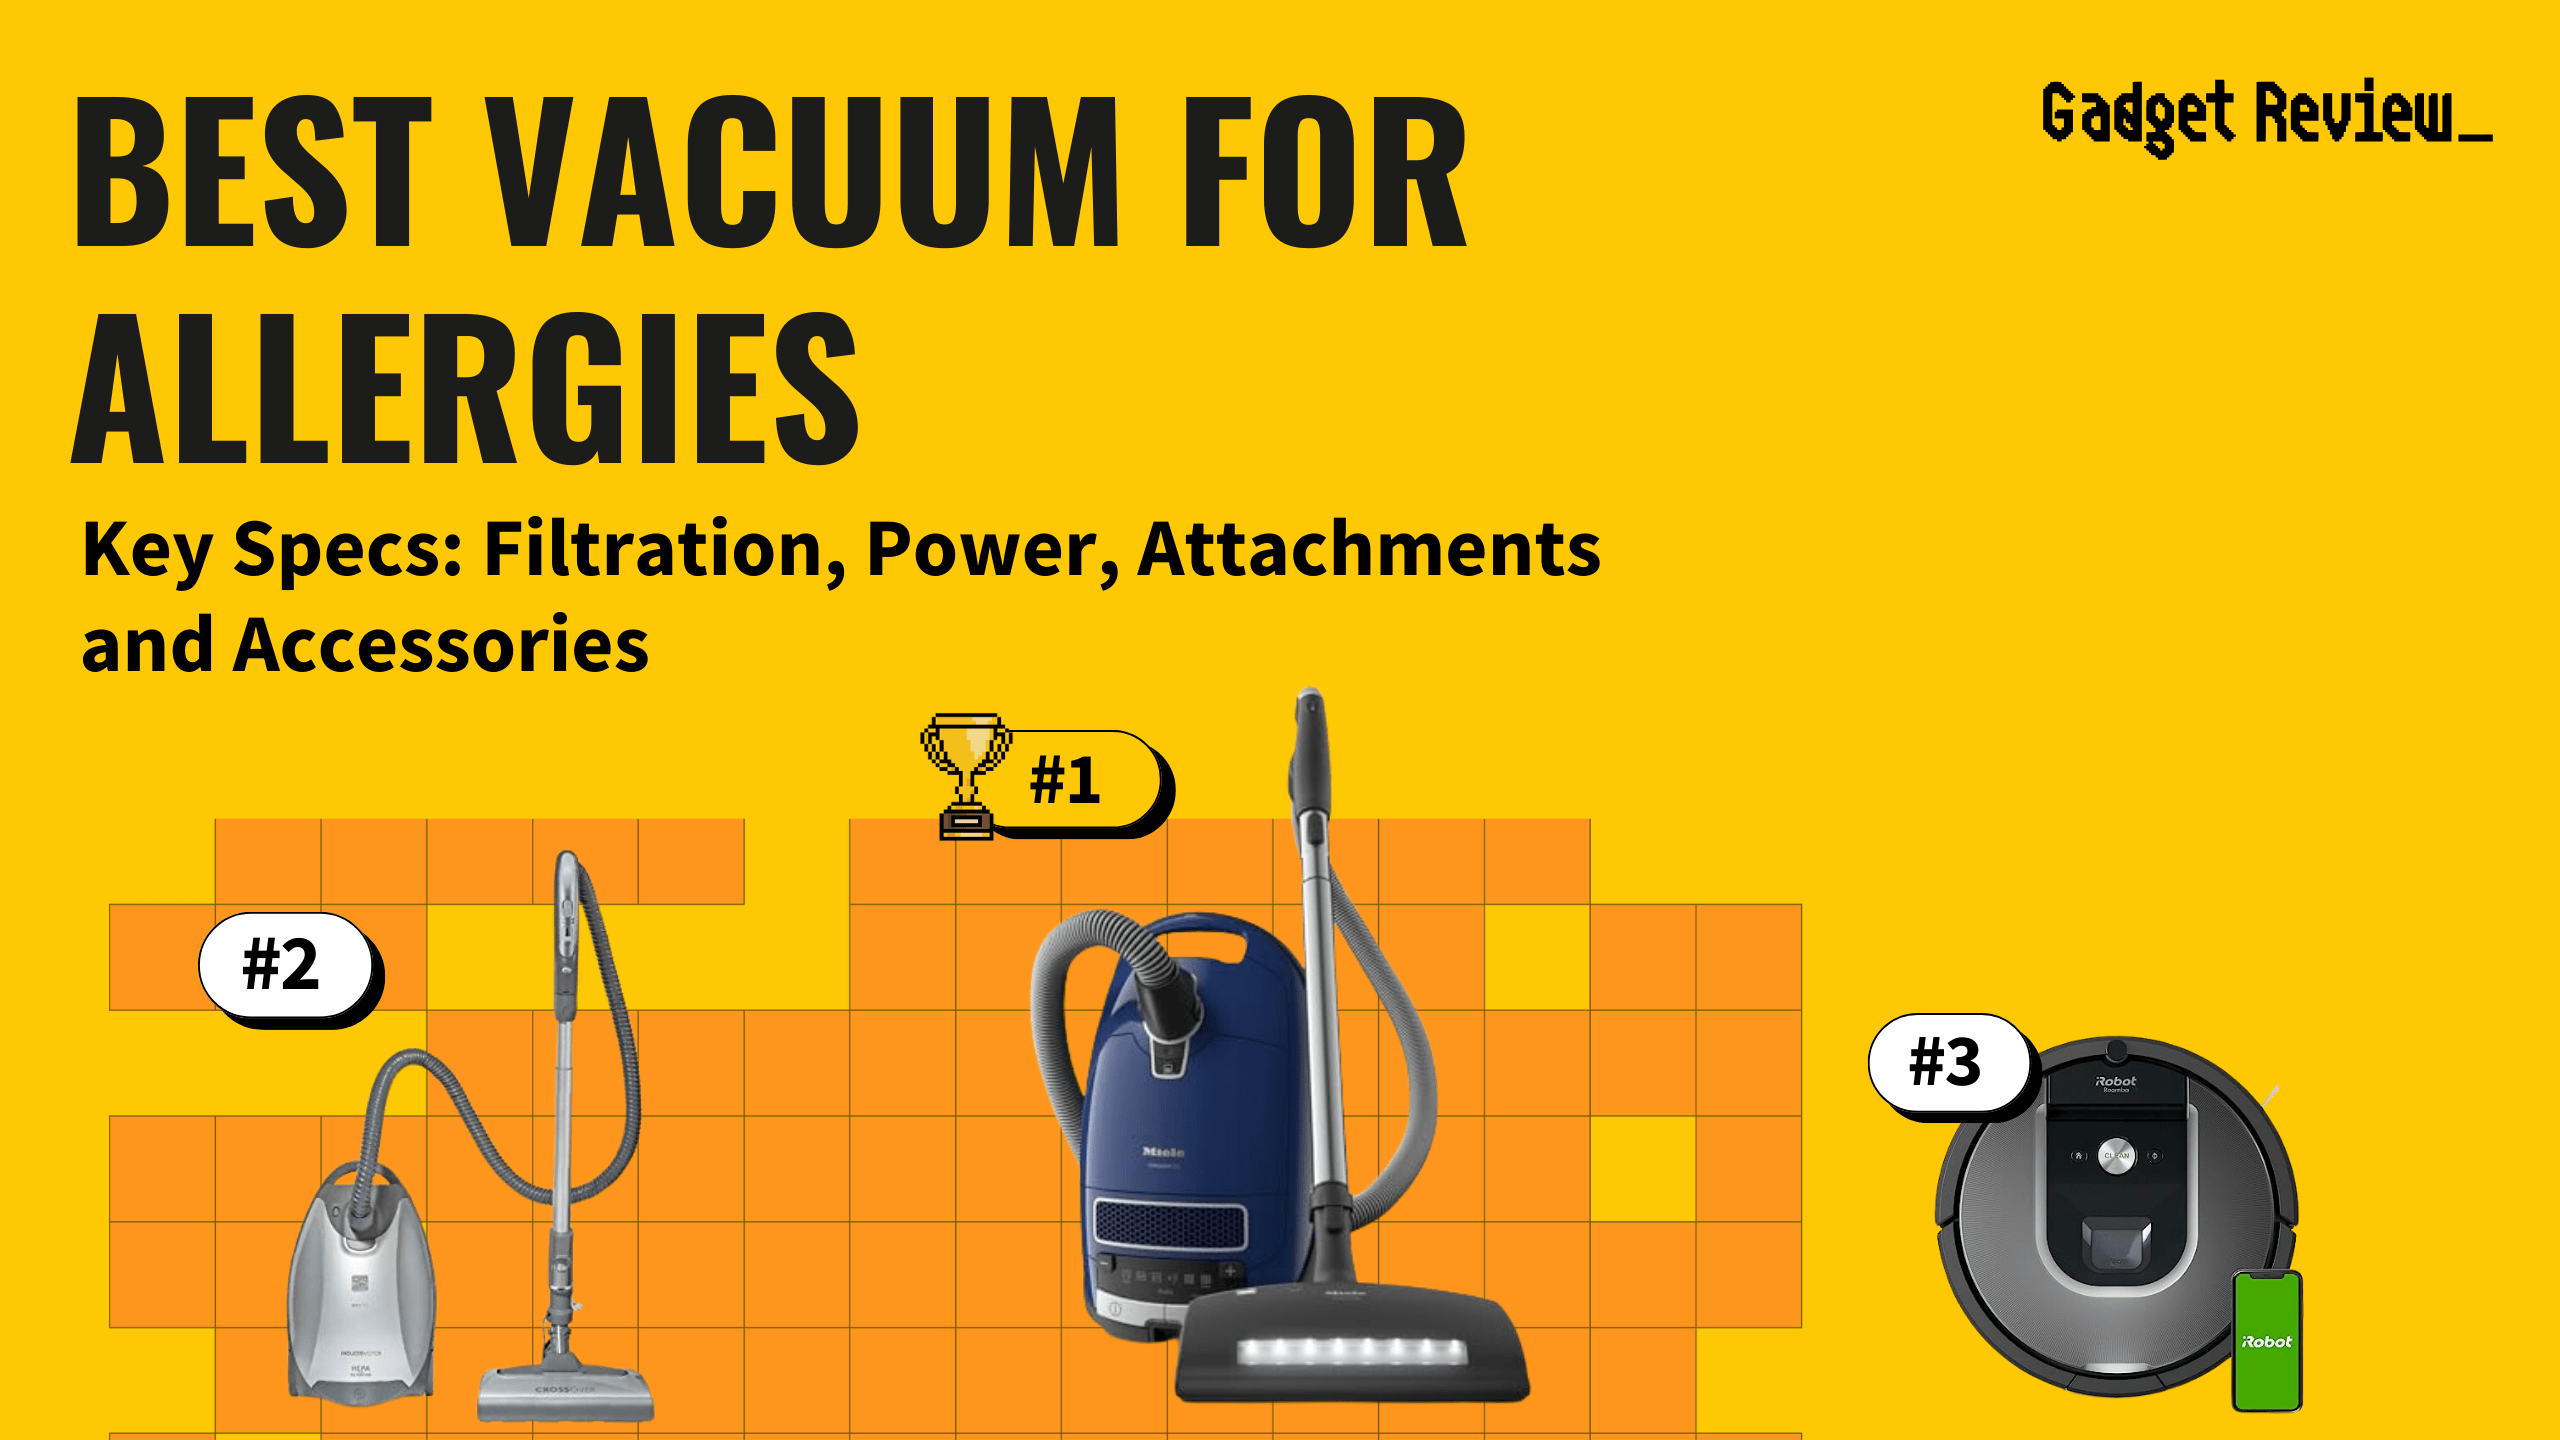 best vacuum allergies guide that shows the top best vacuum cleaner model